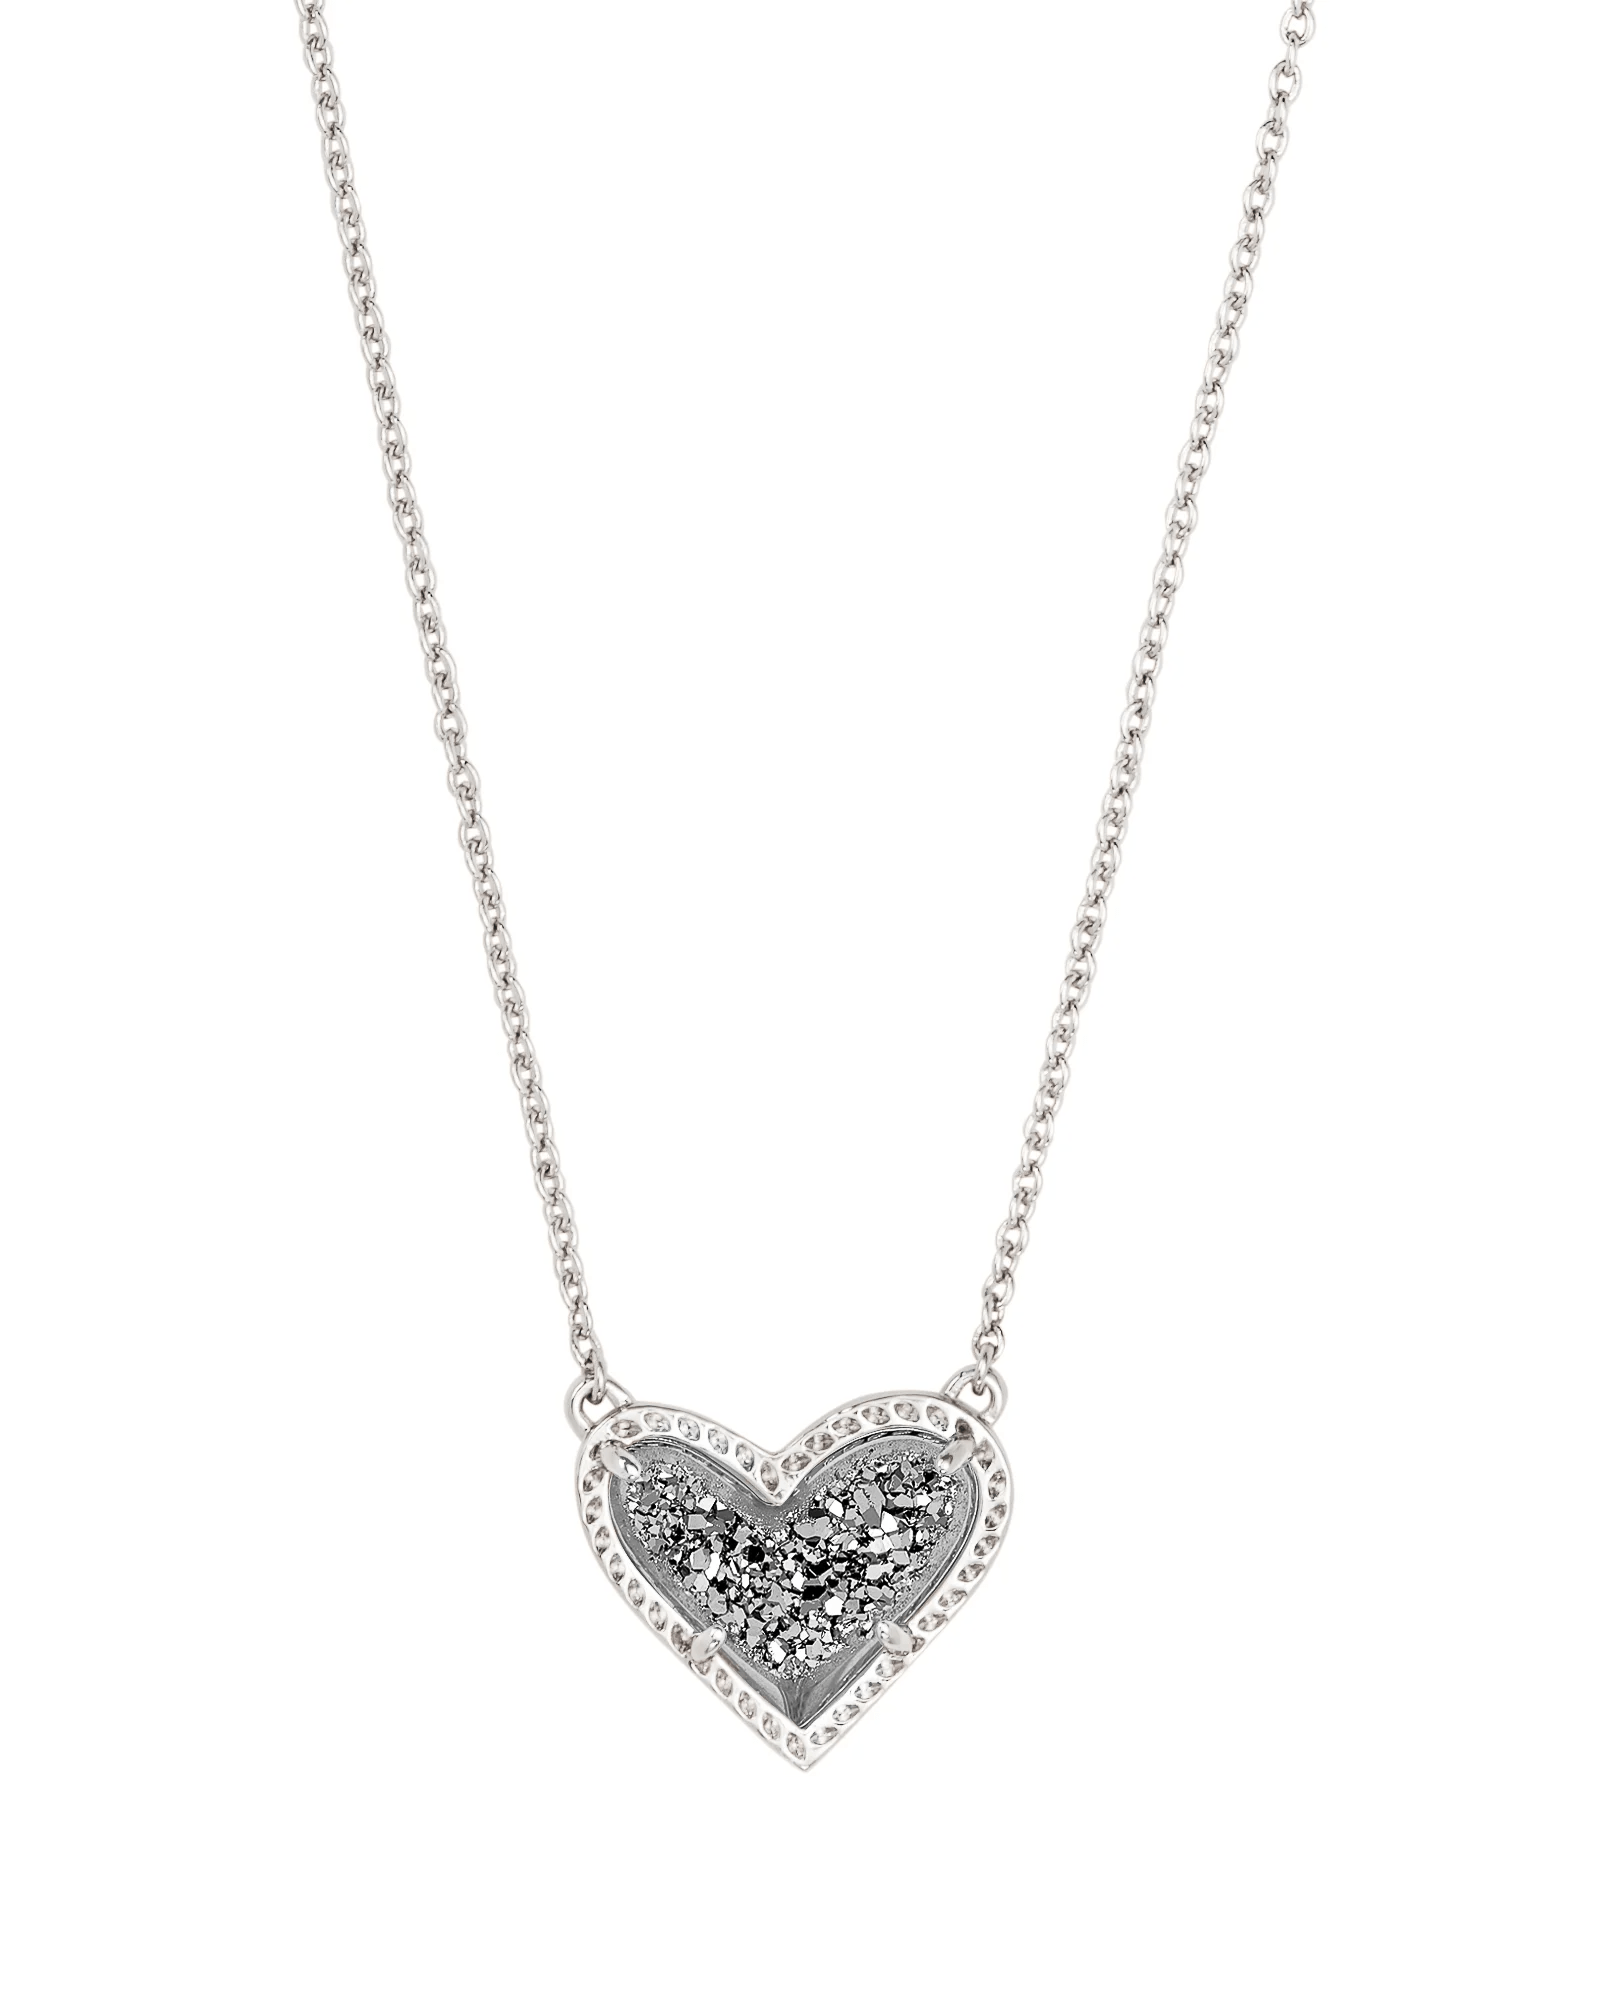 Kendra Scott Women - Accessories - Earrings Ari Heart Silver Pendant Necklace in Platinum Drusy | Kendra Scott